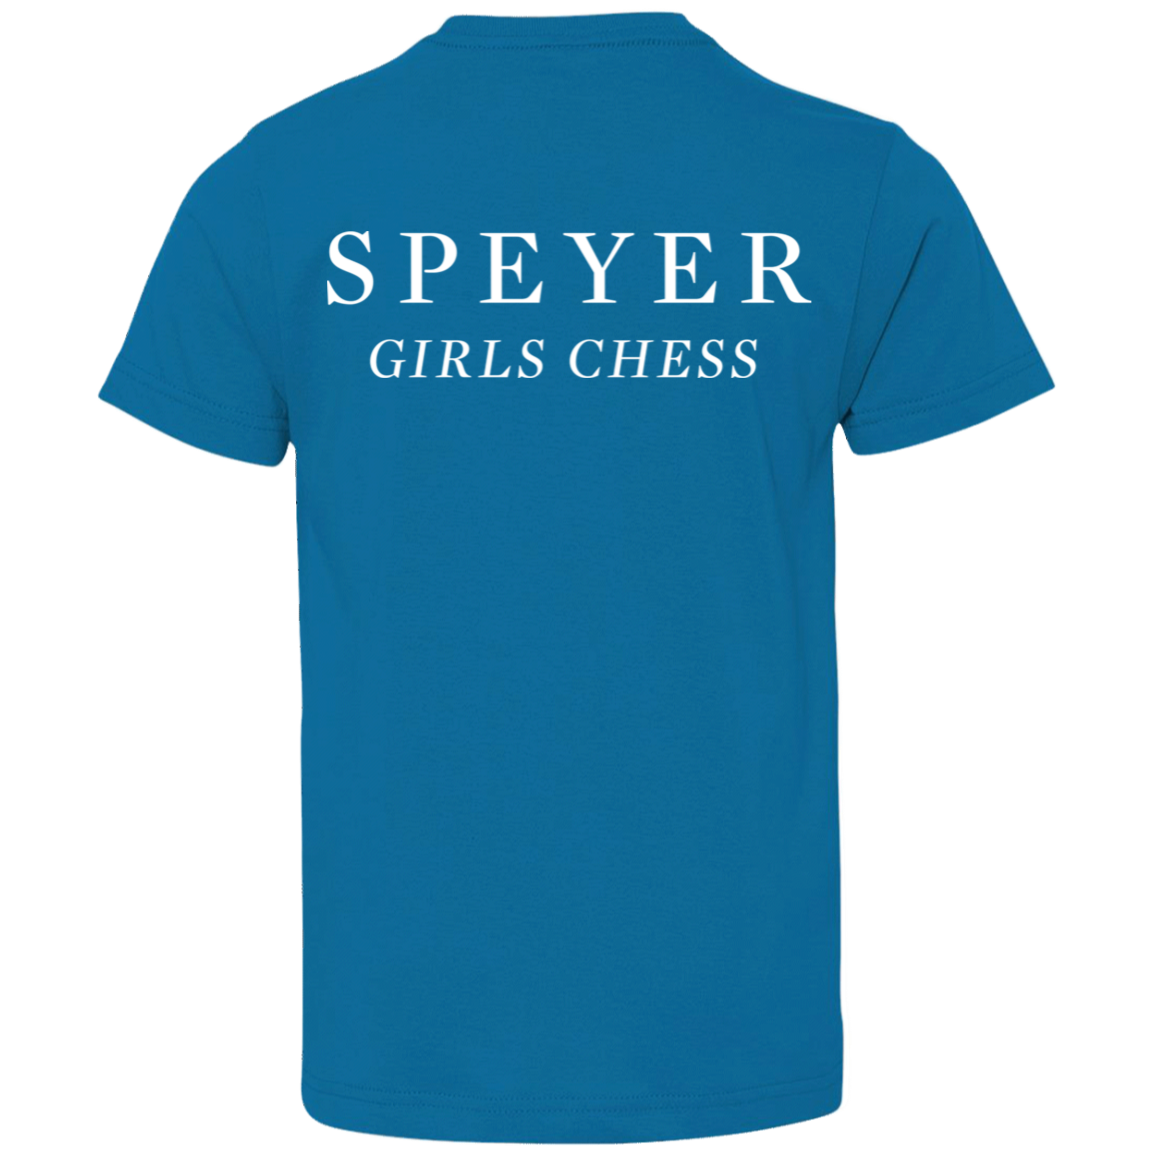 Speyer Girls Chess T-Shirt - Youth Sizes